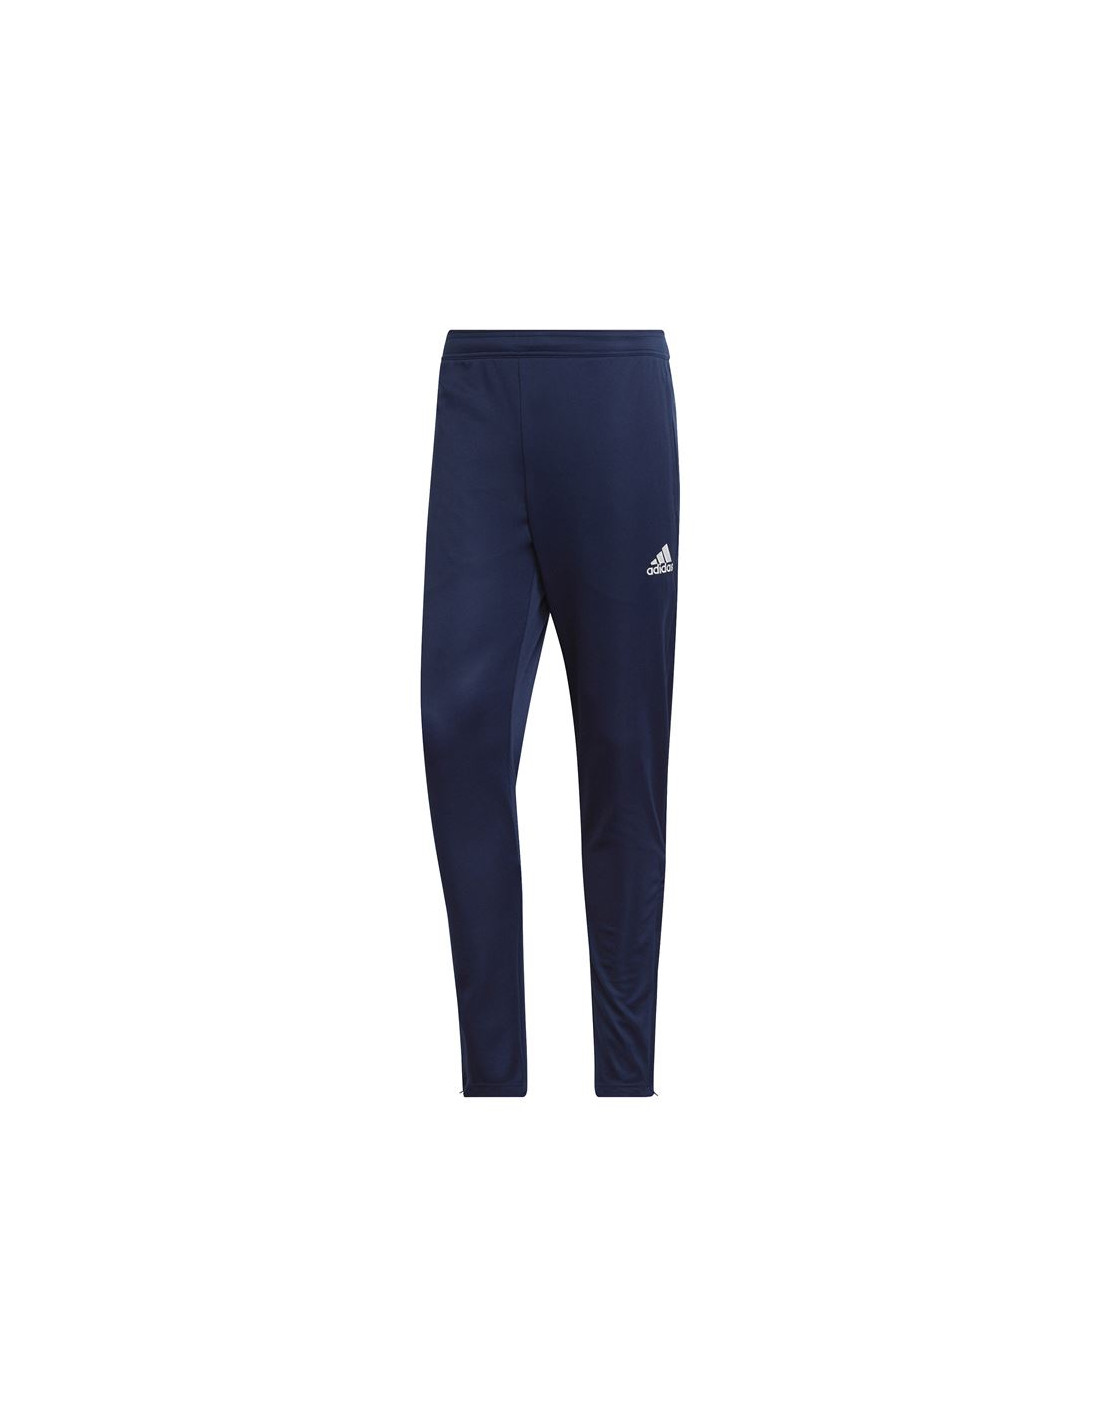 Pantalones de fitness adidas entrada 22 m navy blue